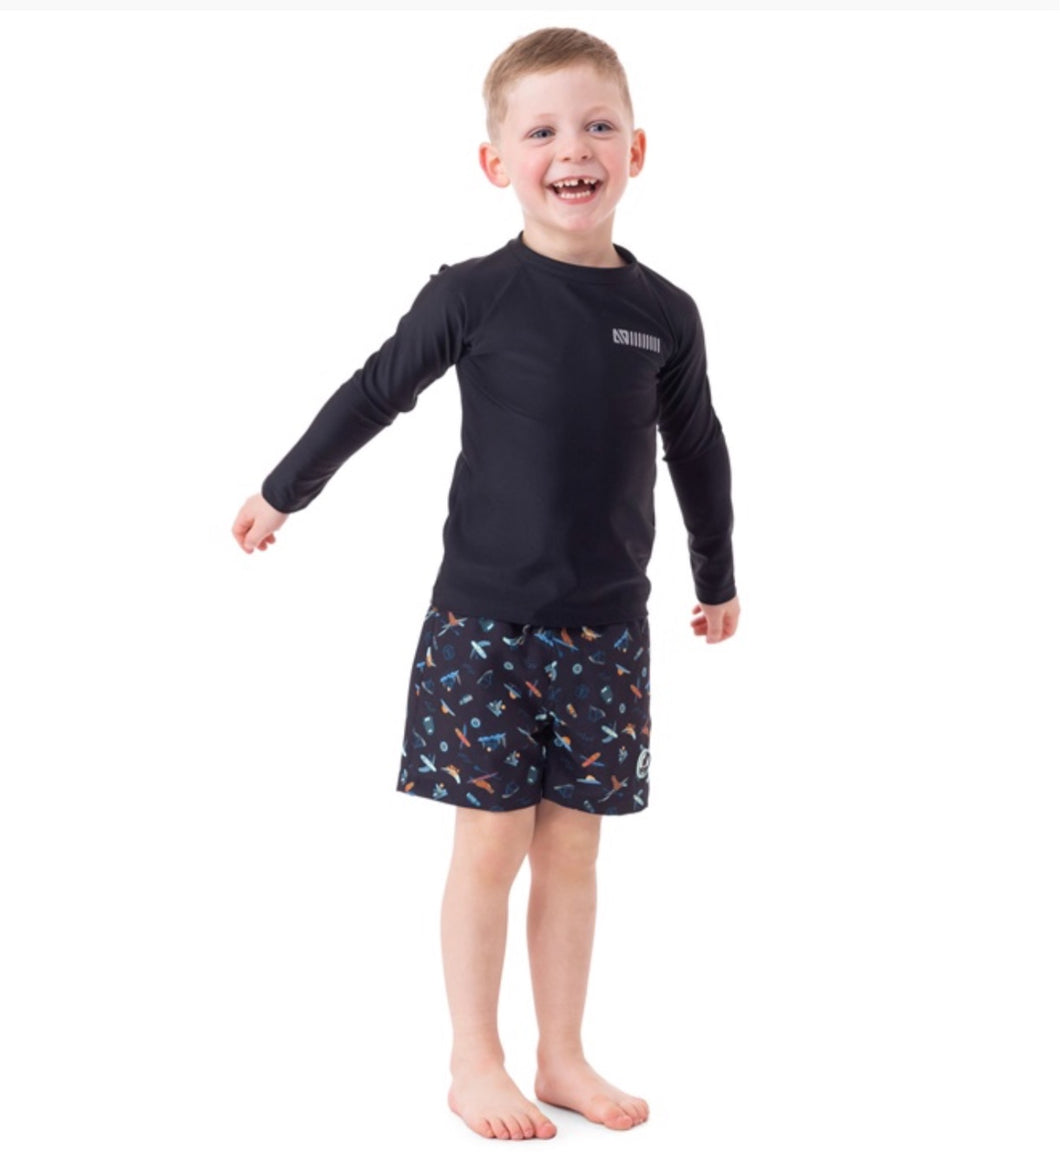 Nano Boys Long Sleeved Rashguard in Black : Size 8 to 12 Years